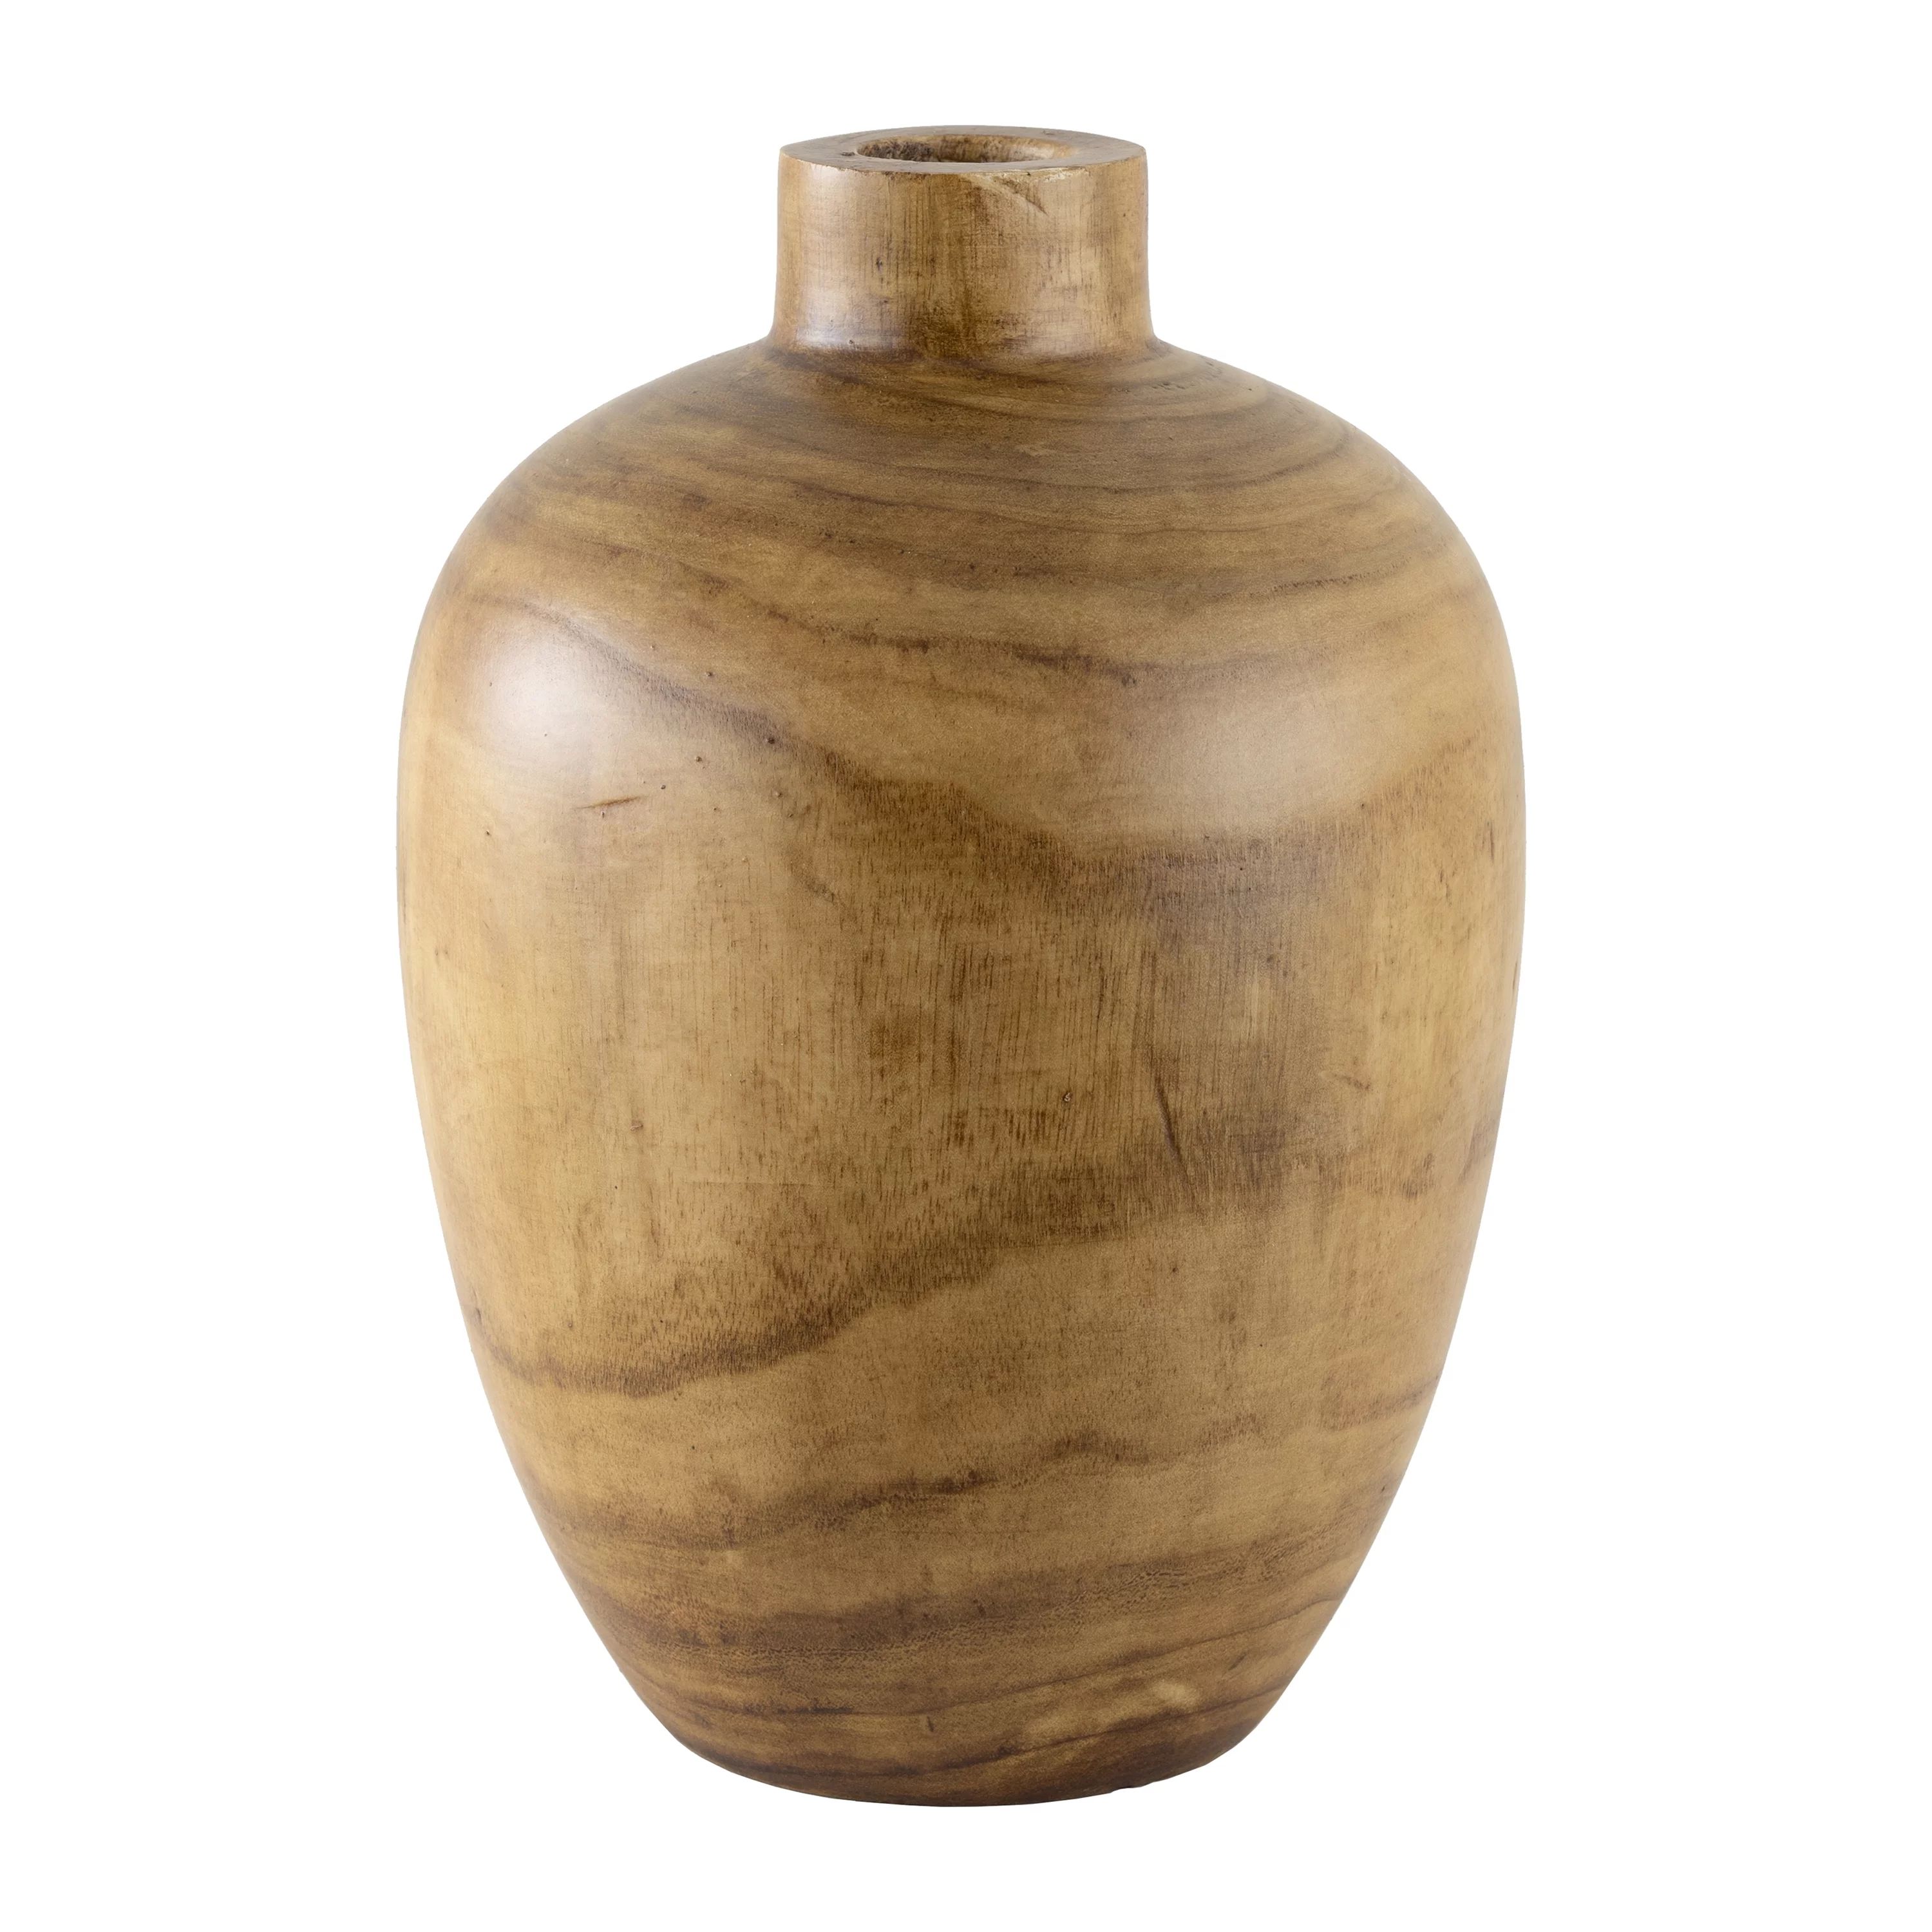 12" Mid-Tone Brown Wood Finish Decorative Indoor Tabletop Vase | Walmart (US)